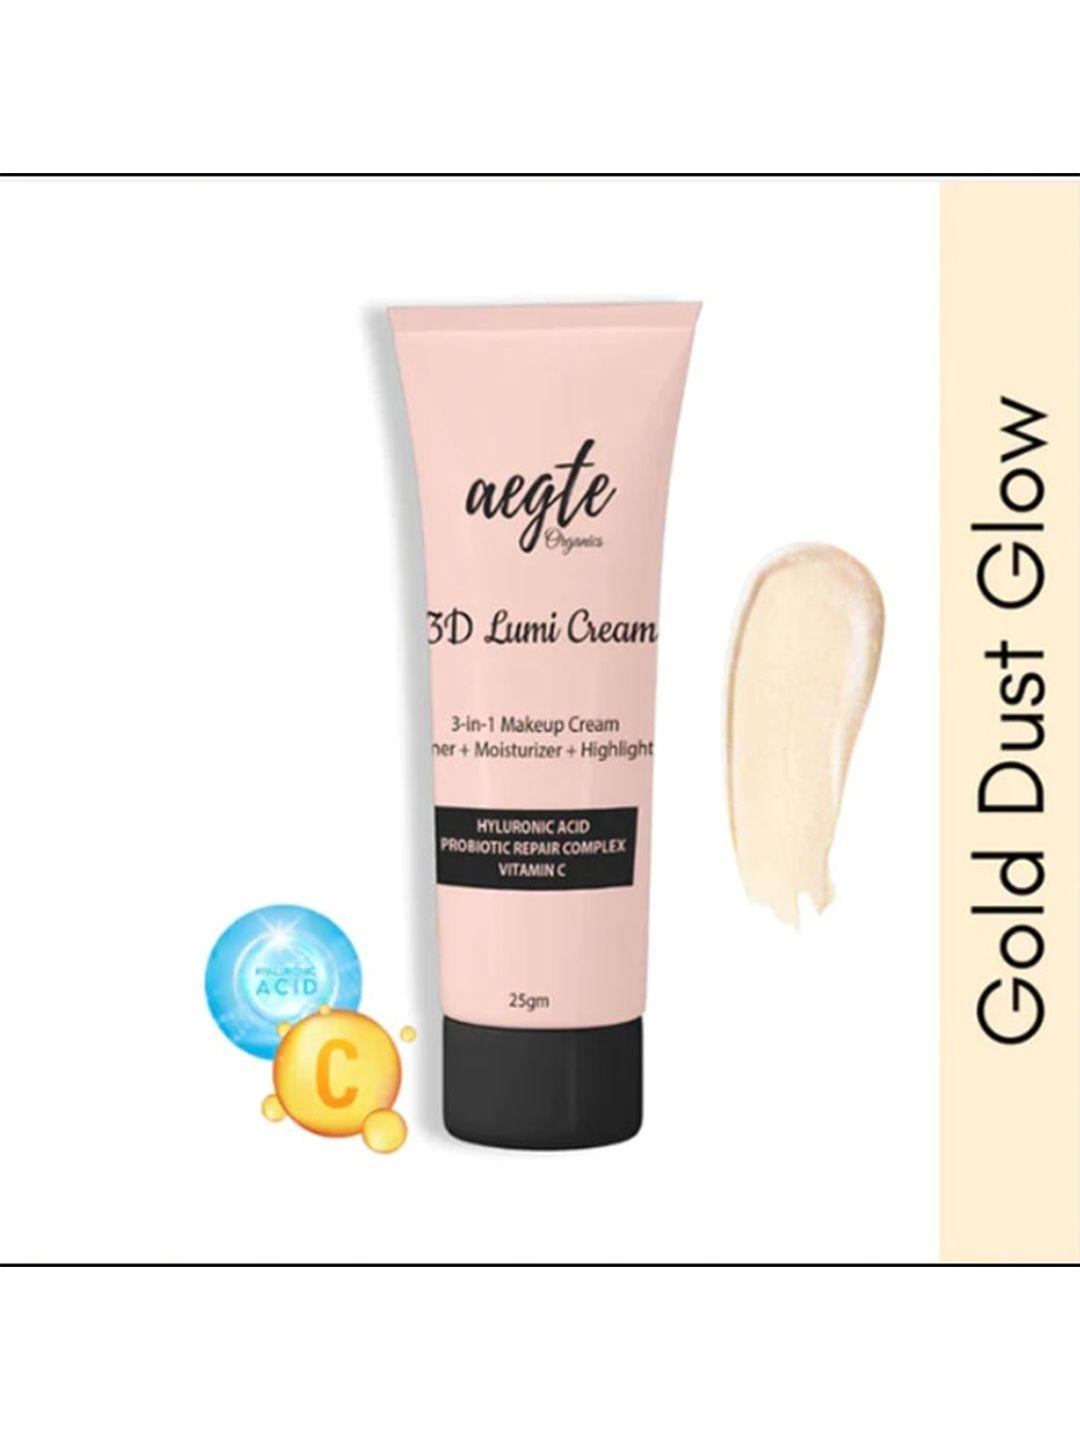 aegte 3d lumi strobe 3-in-1 makeup cream + primer + highlighter 25g - gold dust glow